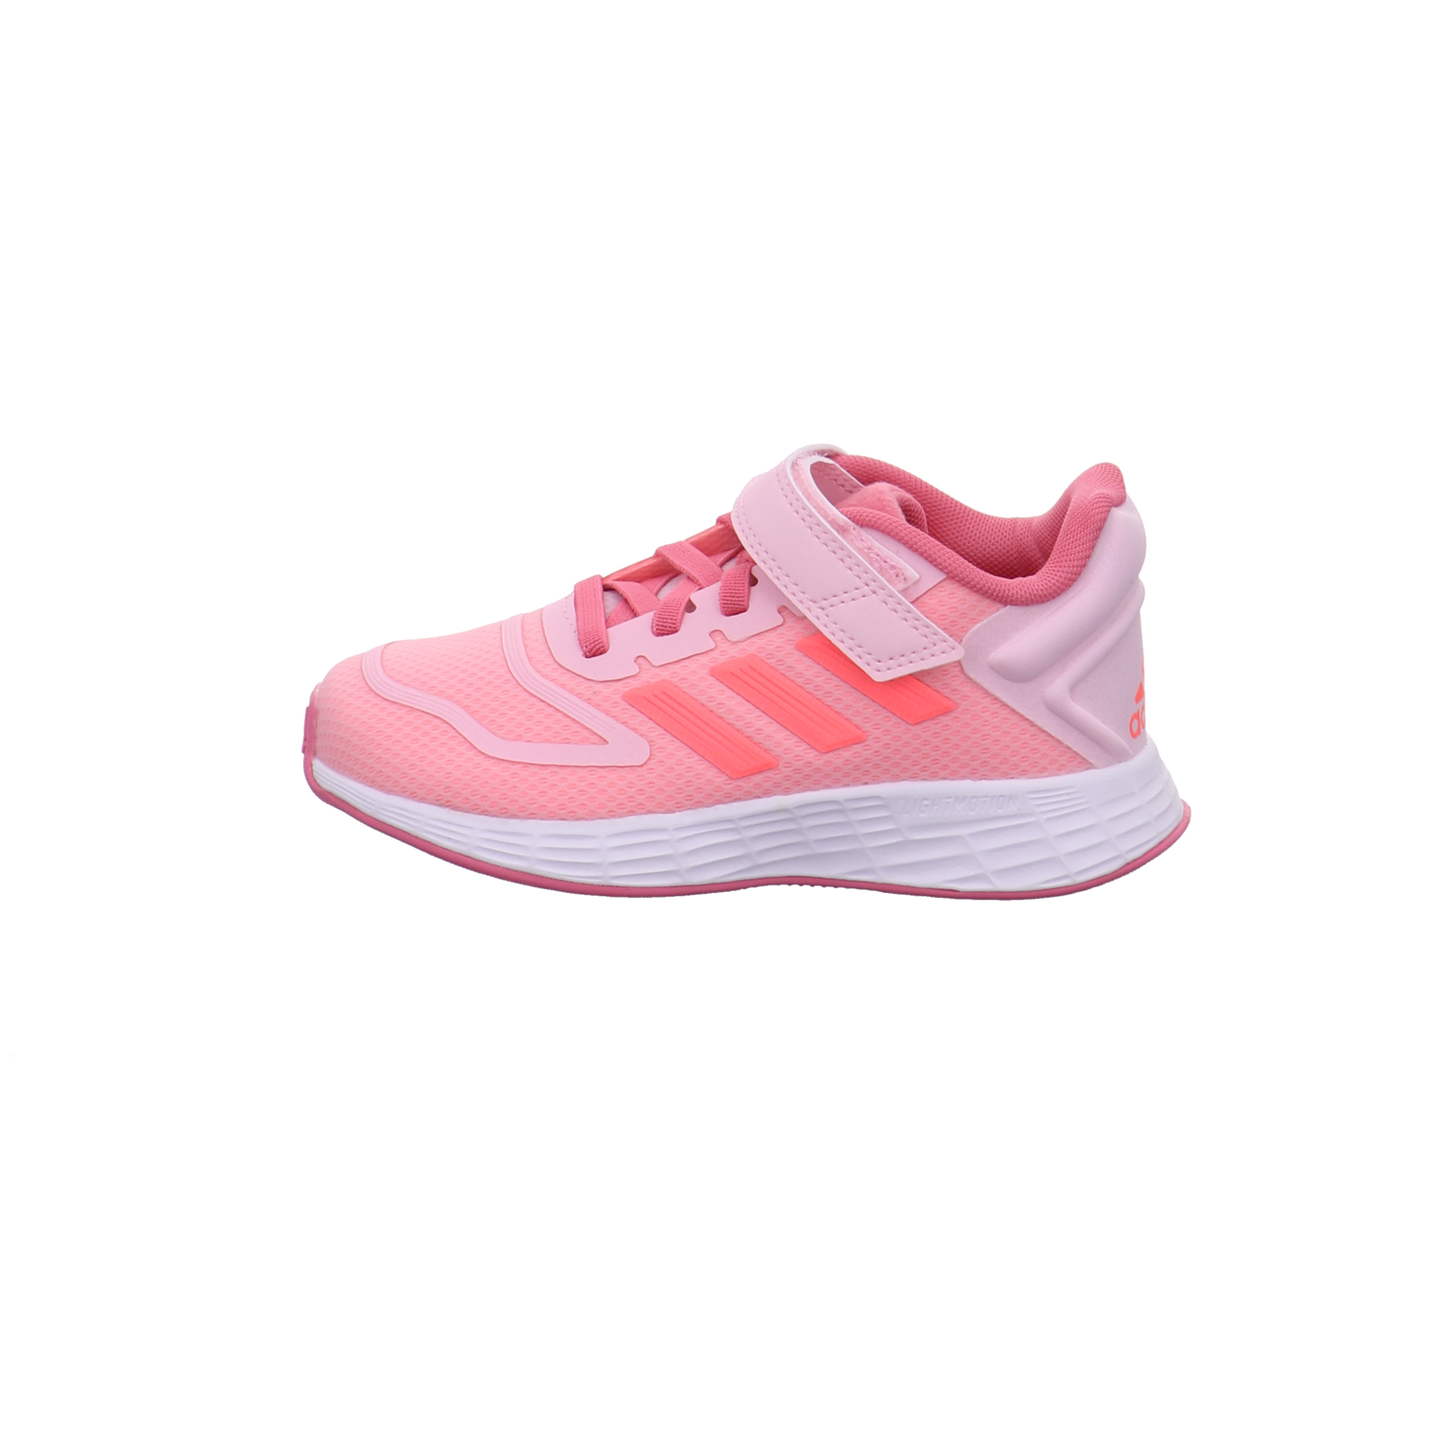 Adidas Halbschuhe pink Bild1